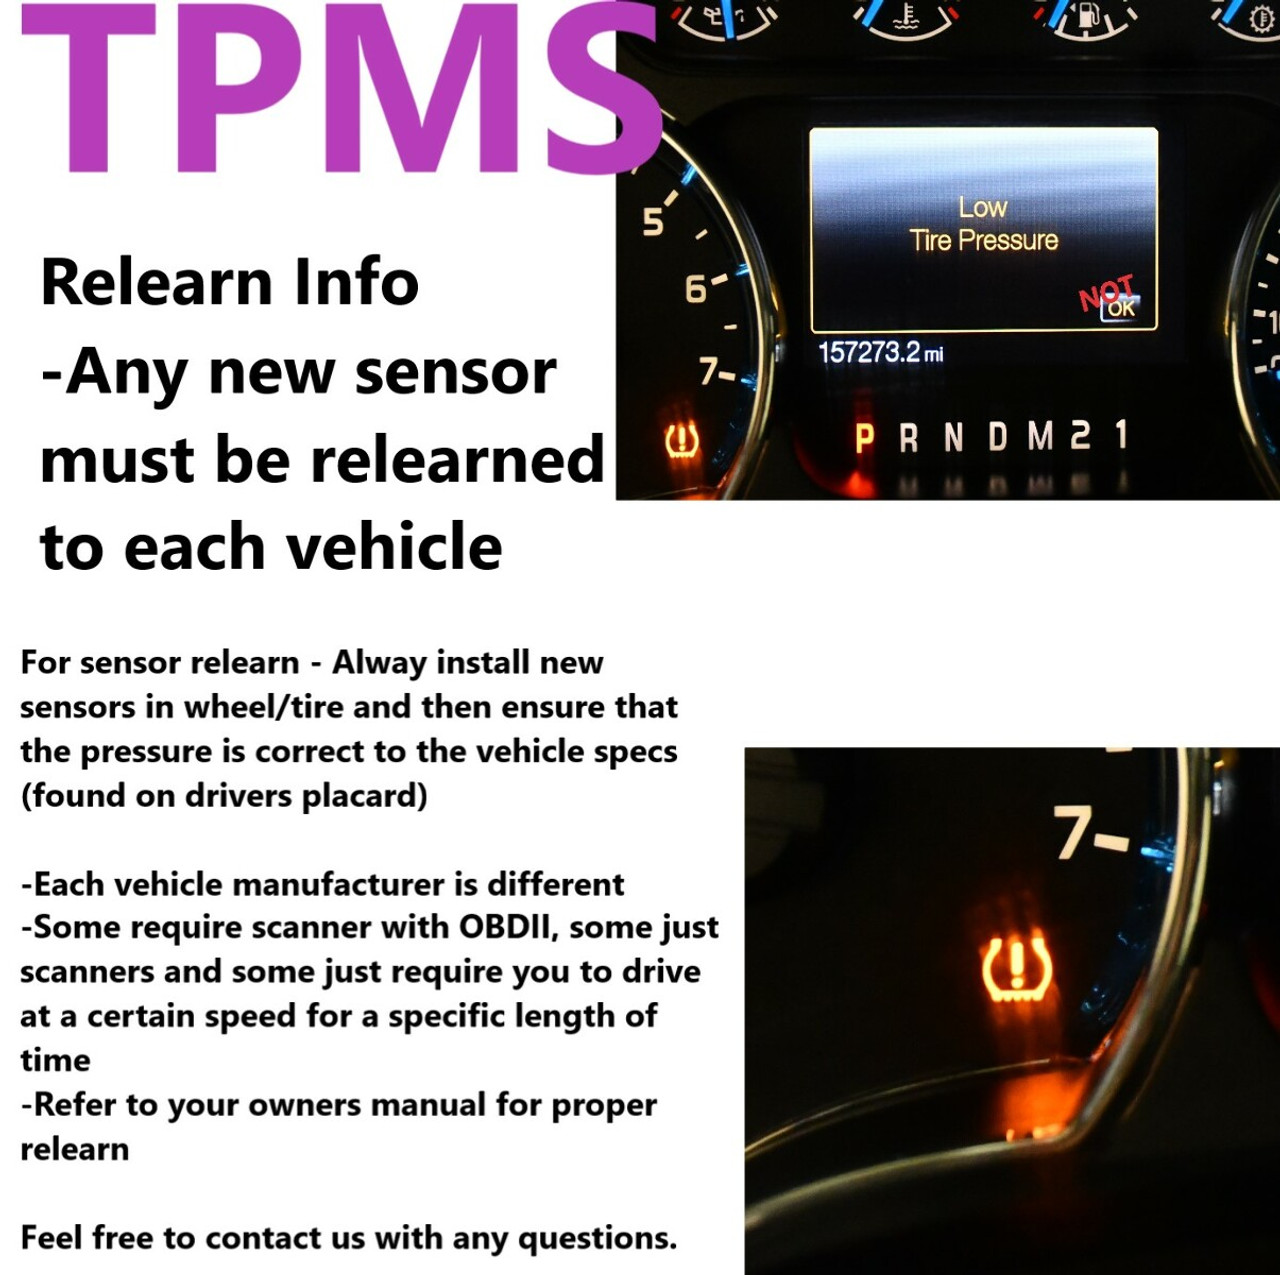 Single TPMS Tire Pressure Sensor 315Mhz Metal fits 07-13 Dodge Sprinter